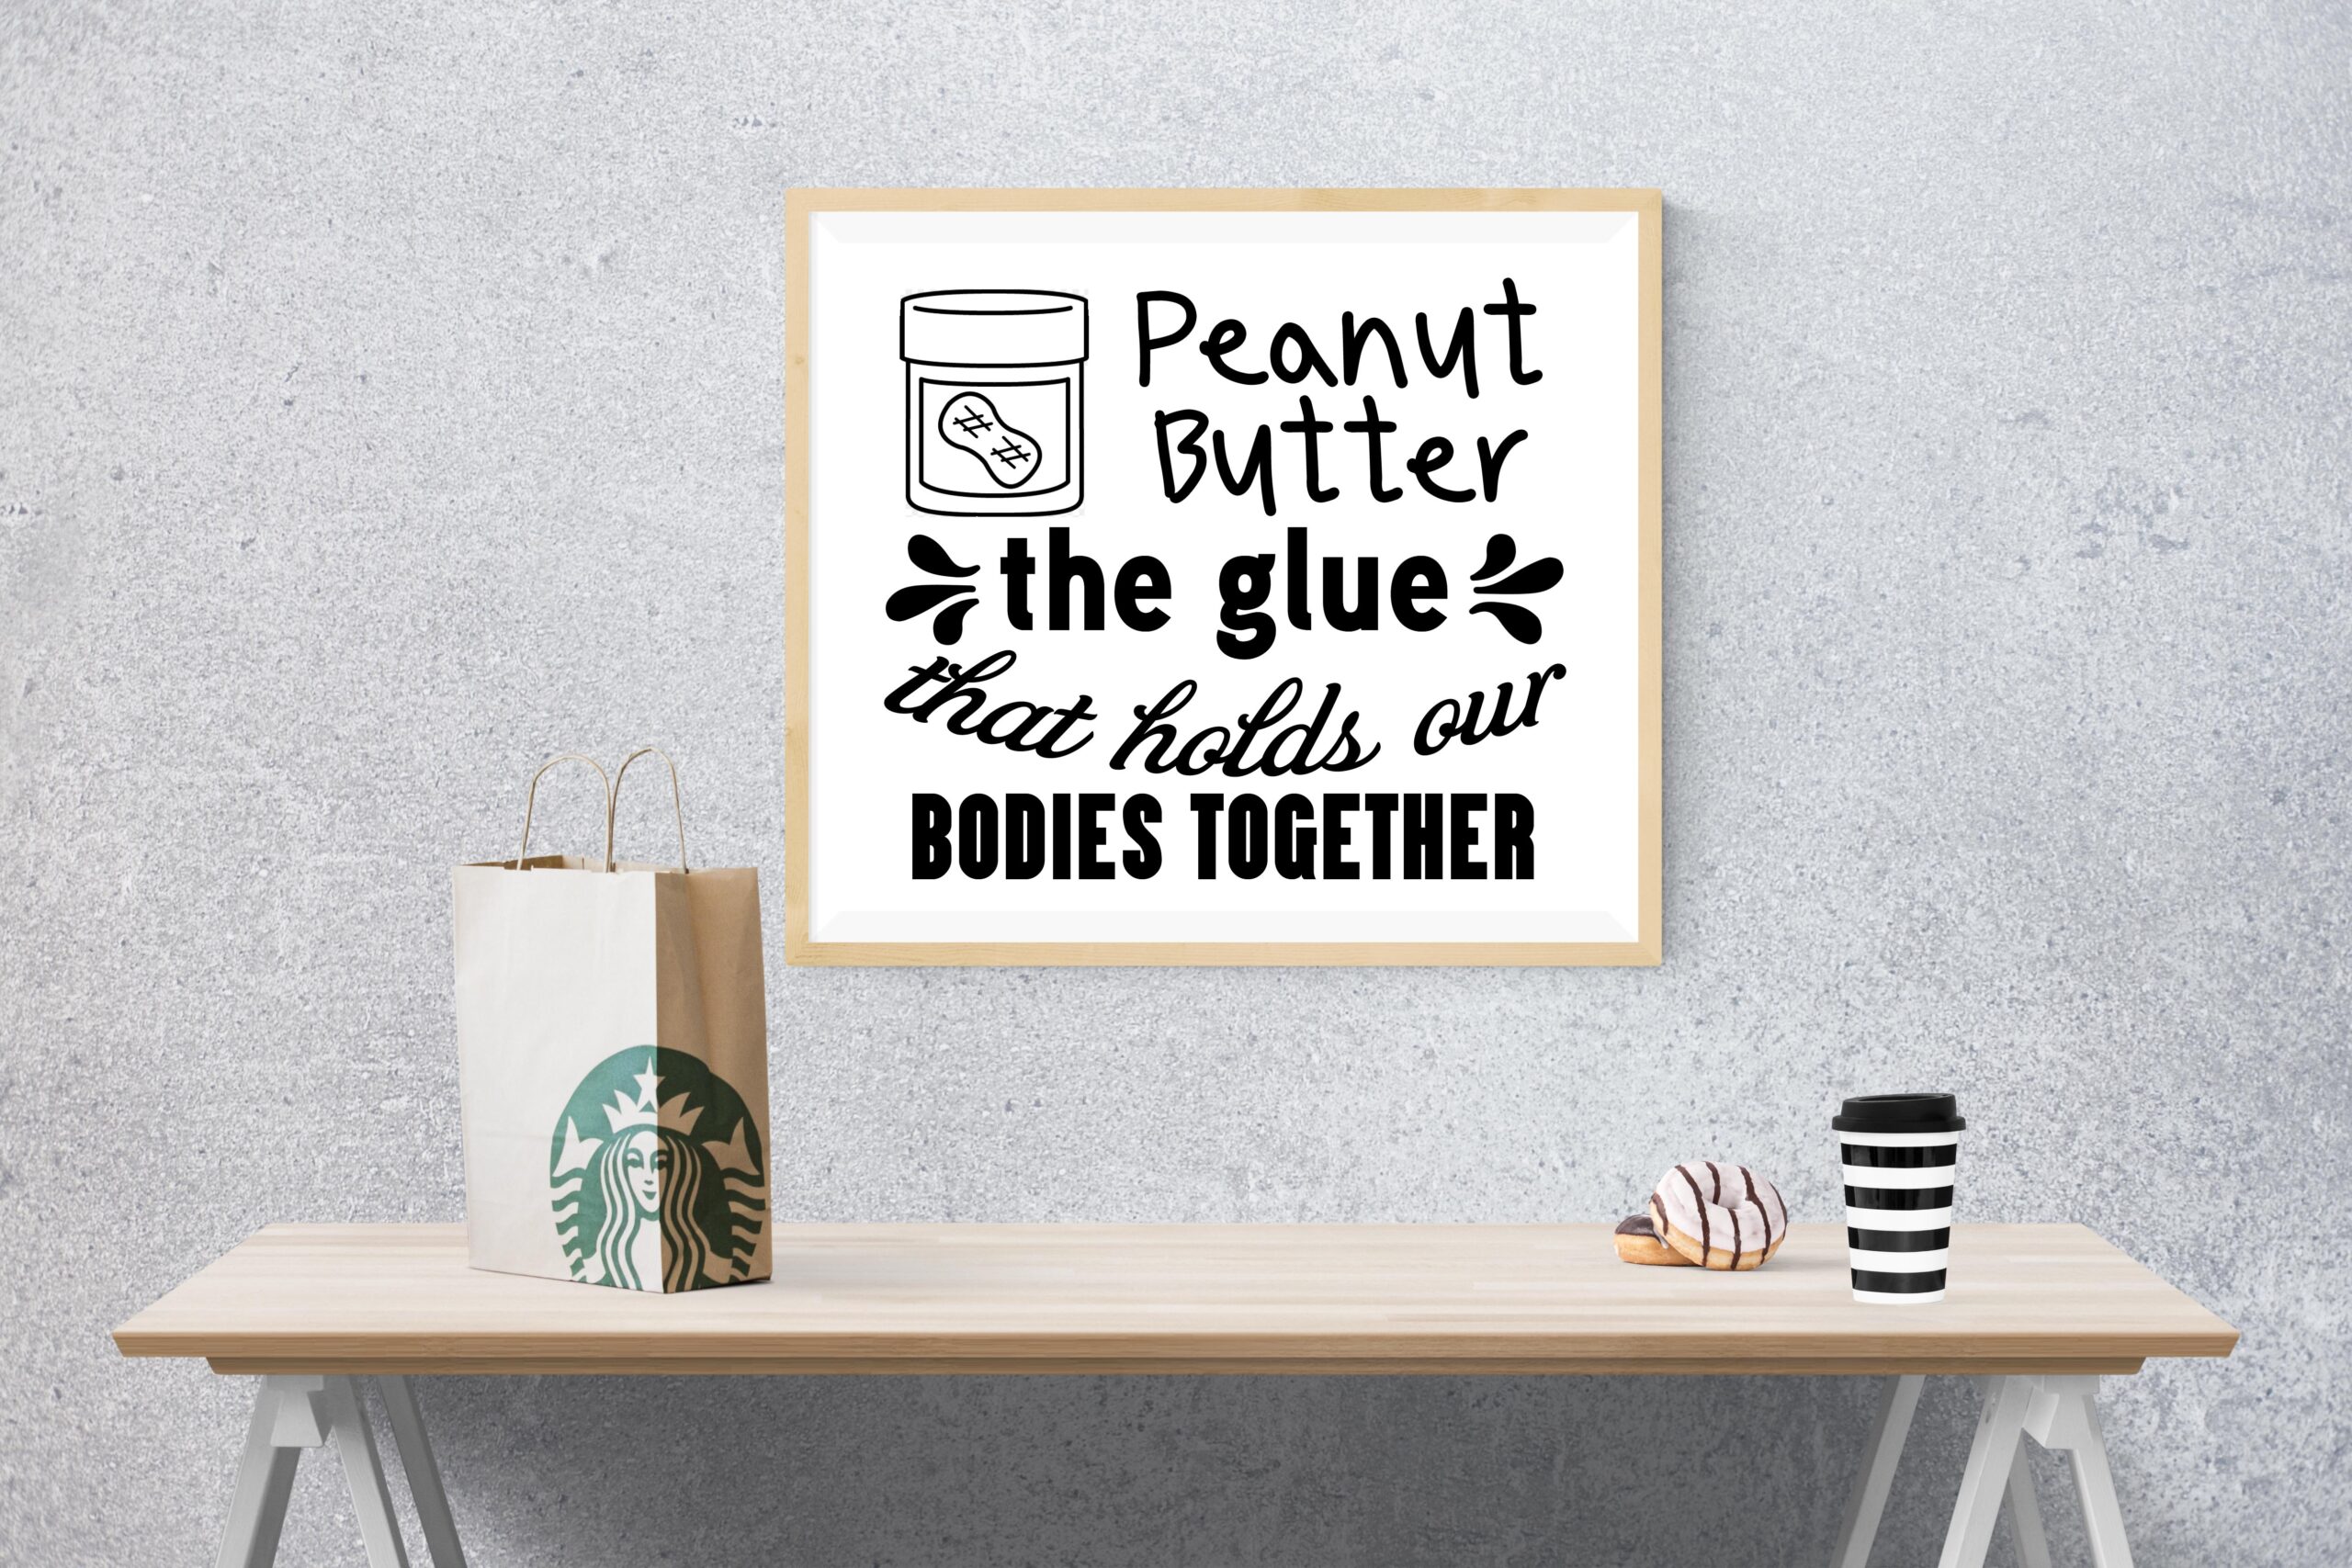 Free Peanut Butter SVG File